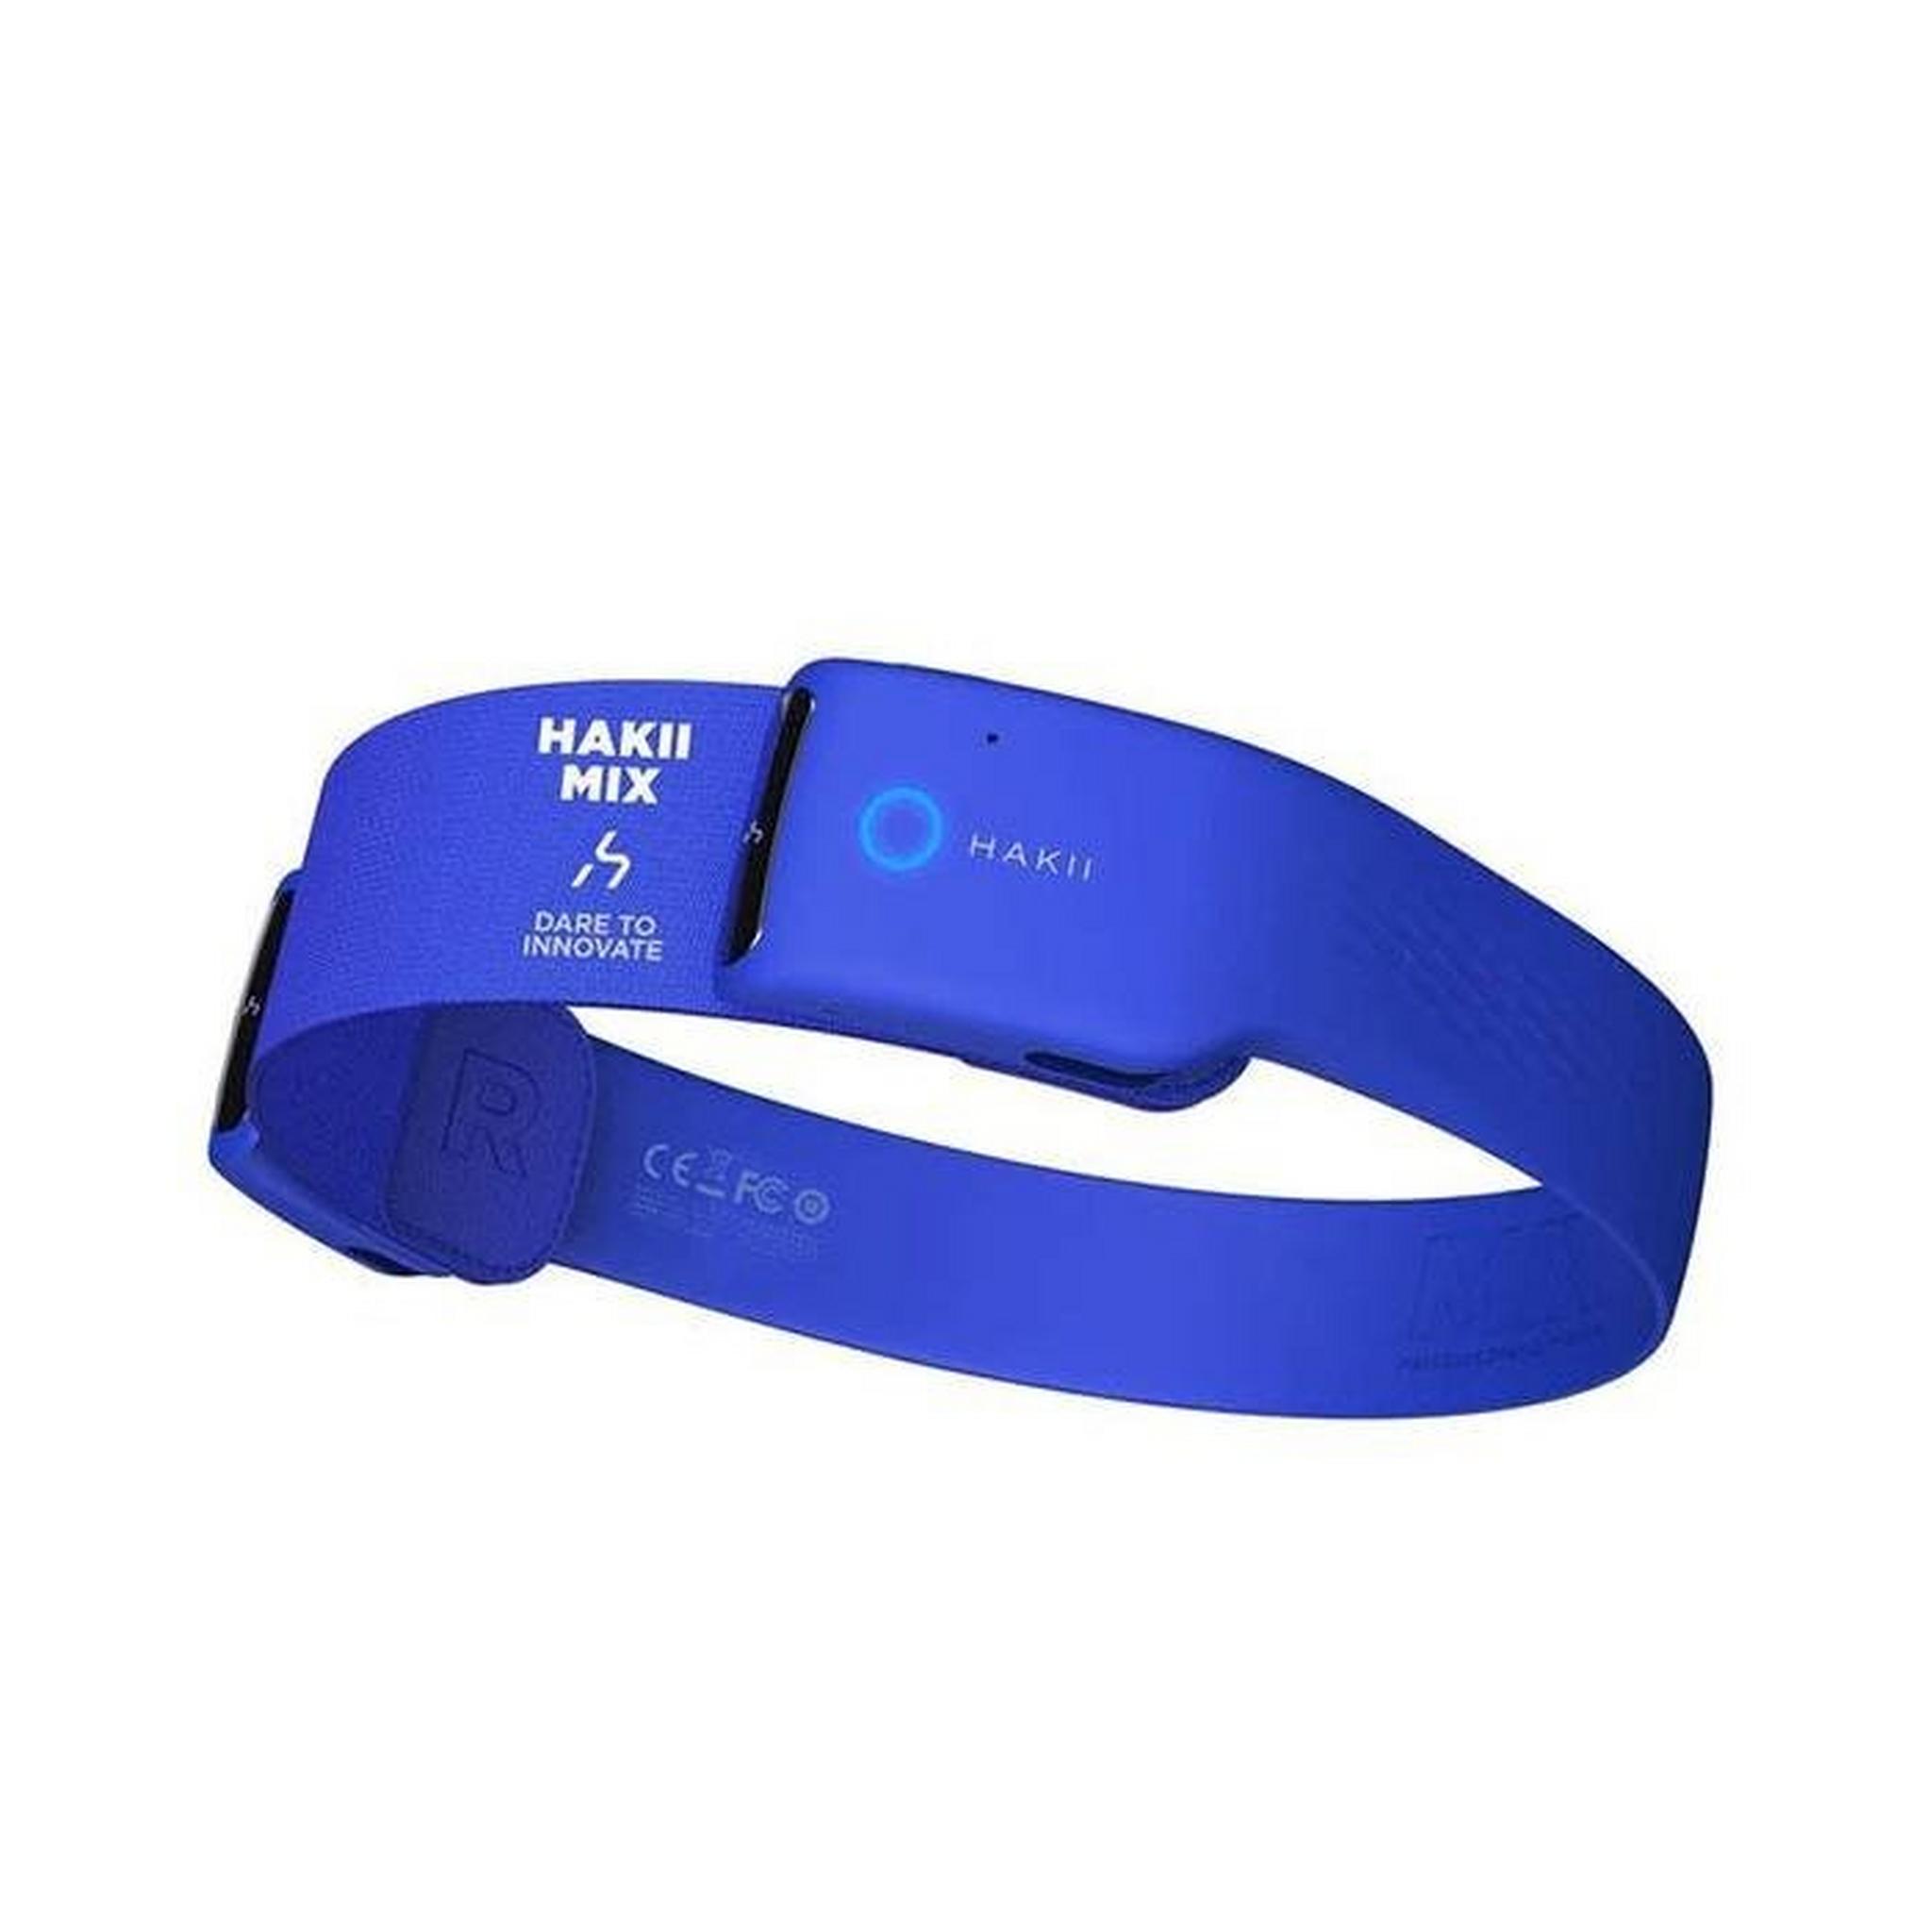 Havit Hakii Mix Smart Bluetooth Headset – Blue